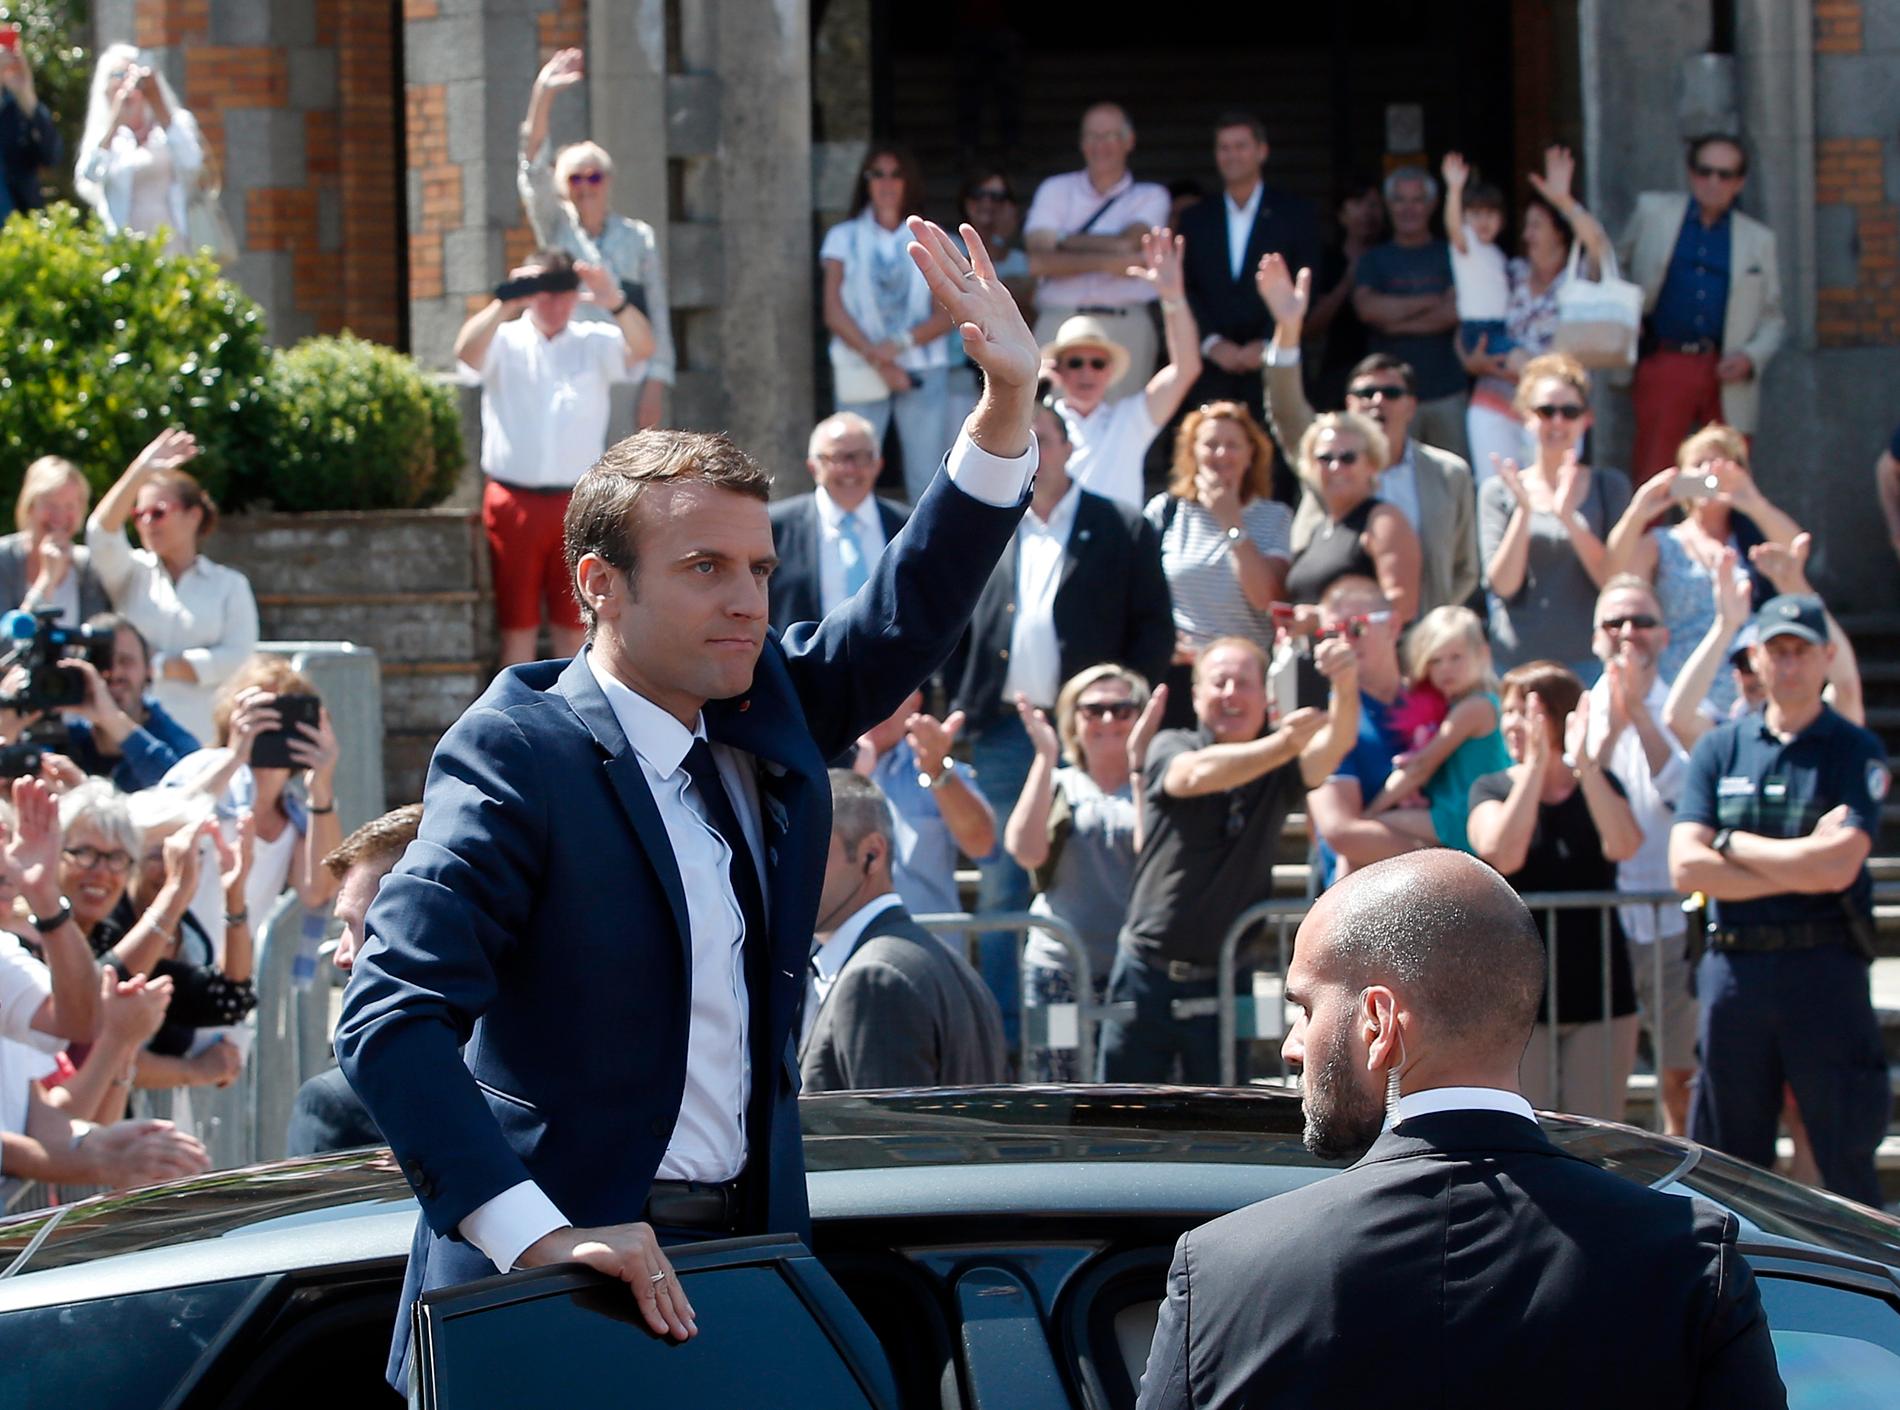 Frankrikes president Emmanuel Macron vinkar när han lämnar vallokalen i Le Touquet i norra Frankrike.